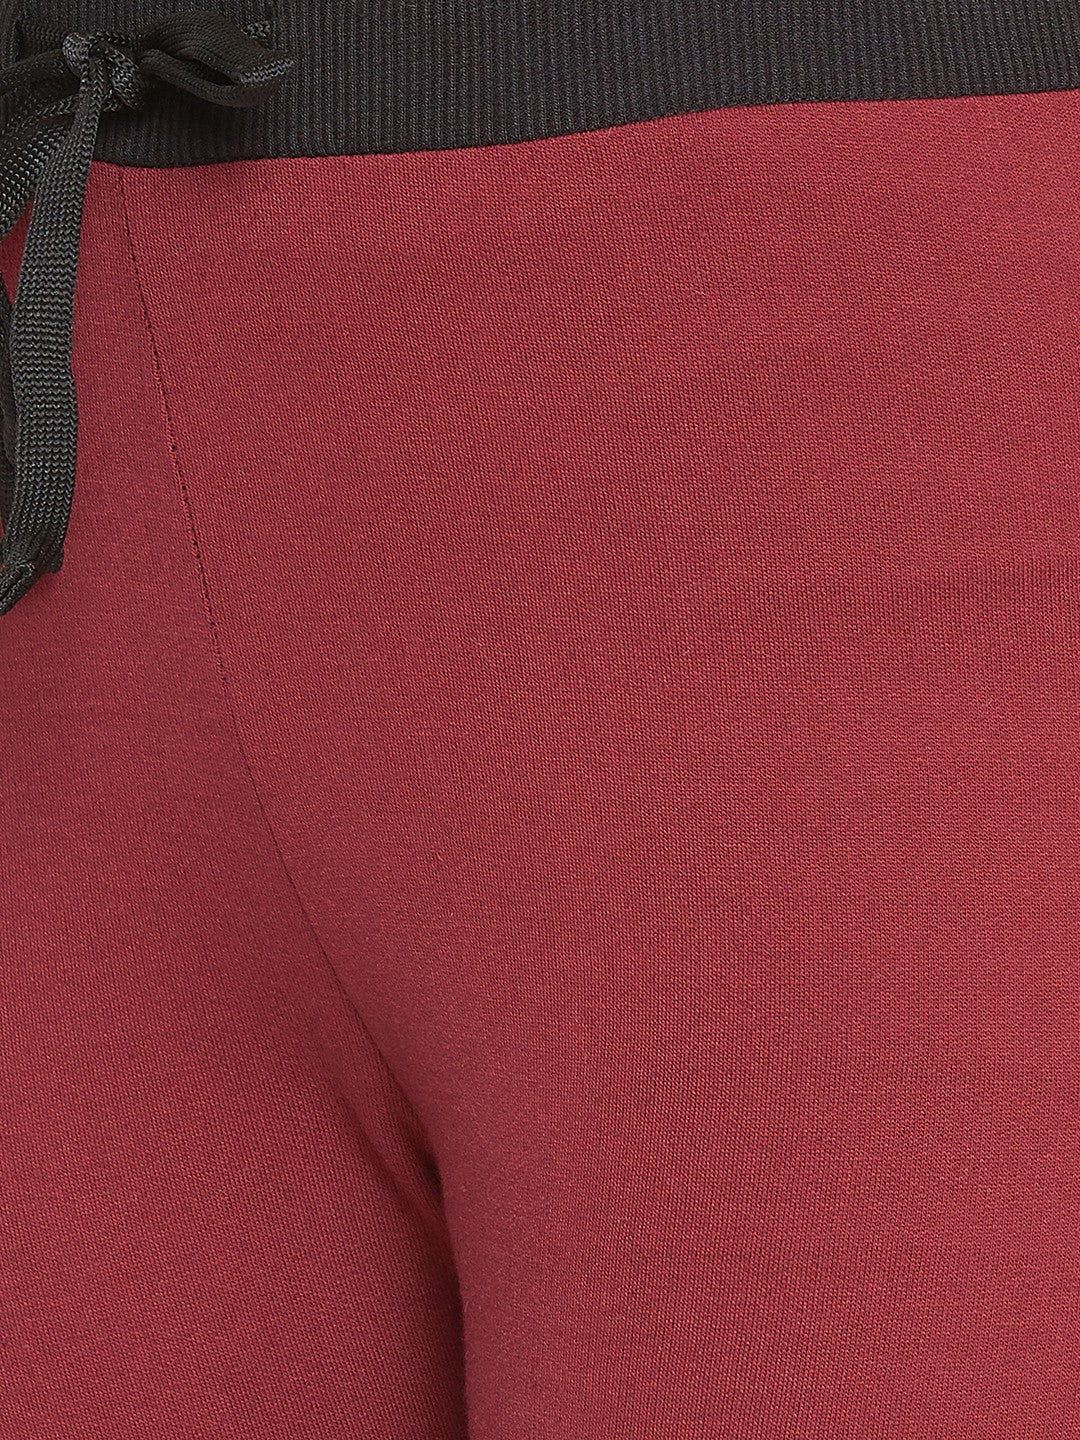 Austin Wood Women'sBlack Full Sleeves Colorblocked High Neck Tracksuit